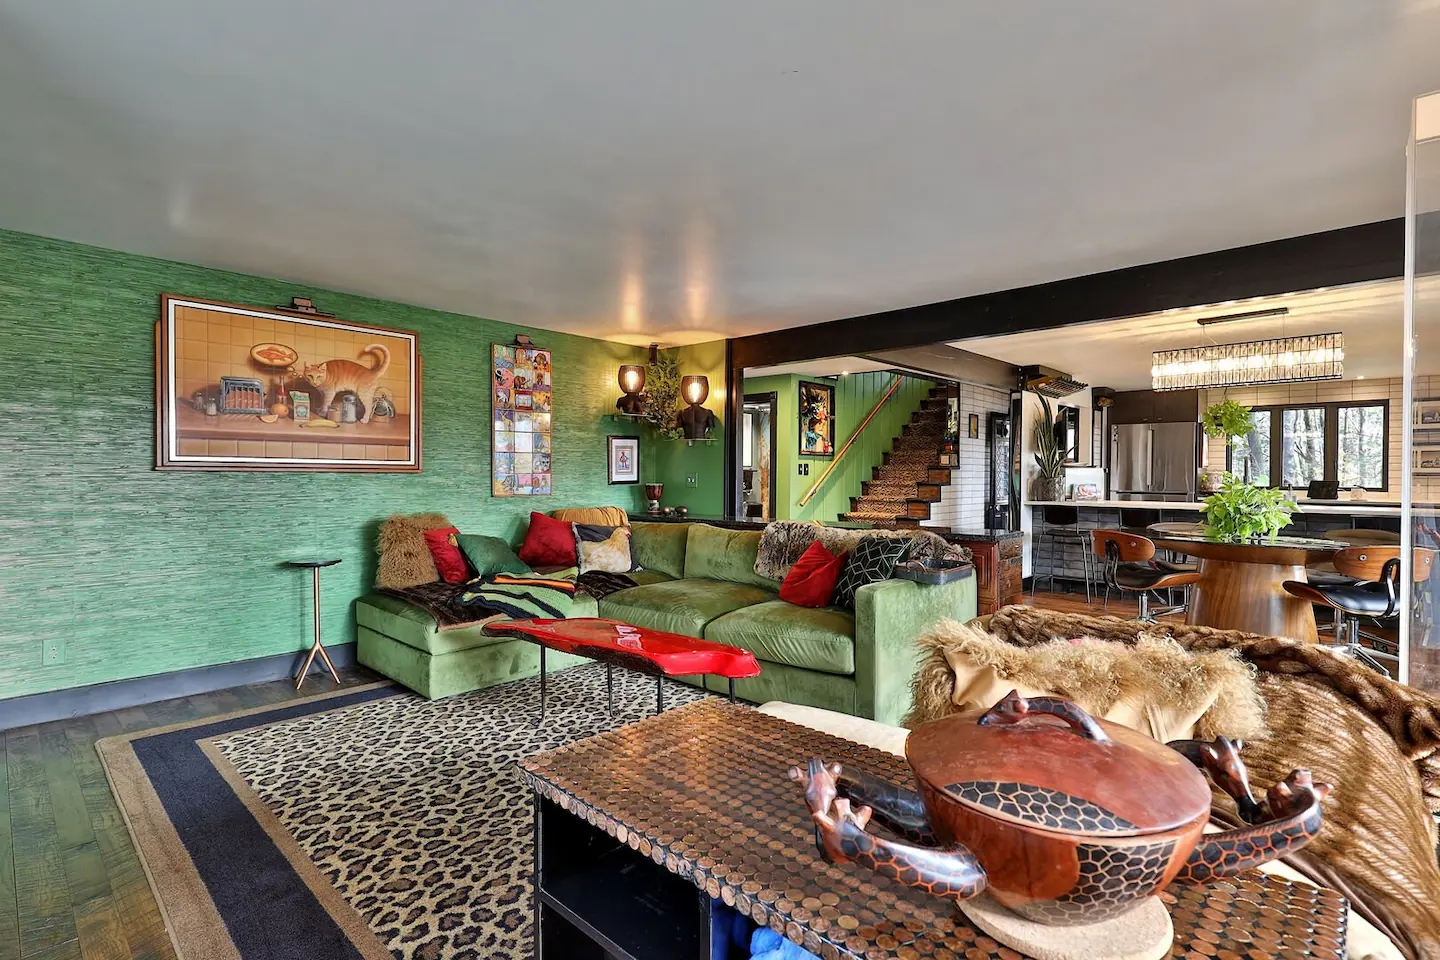 Cozy living room of a Killington, VT ski condo with a sofa, green wall and animal-print furnishings